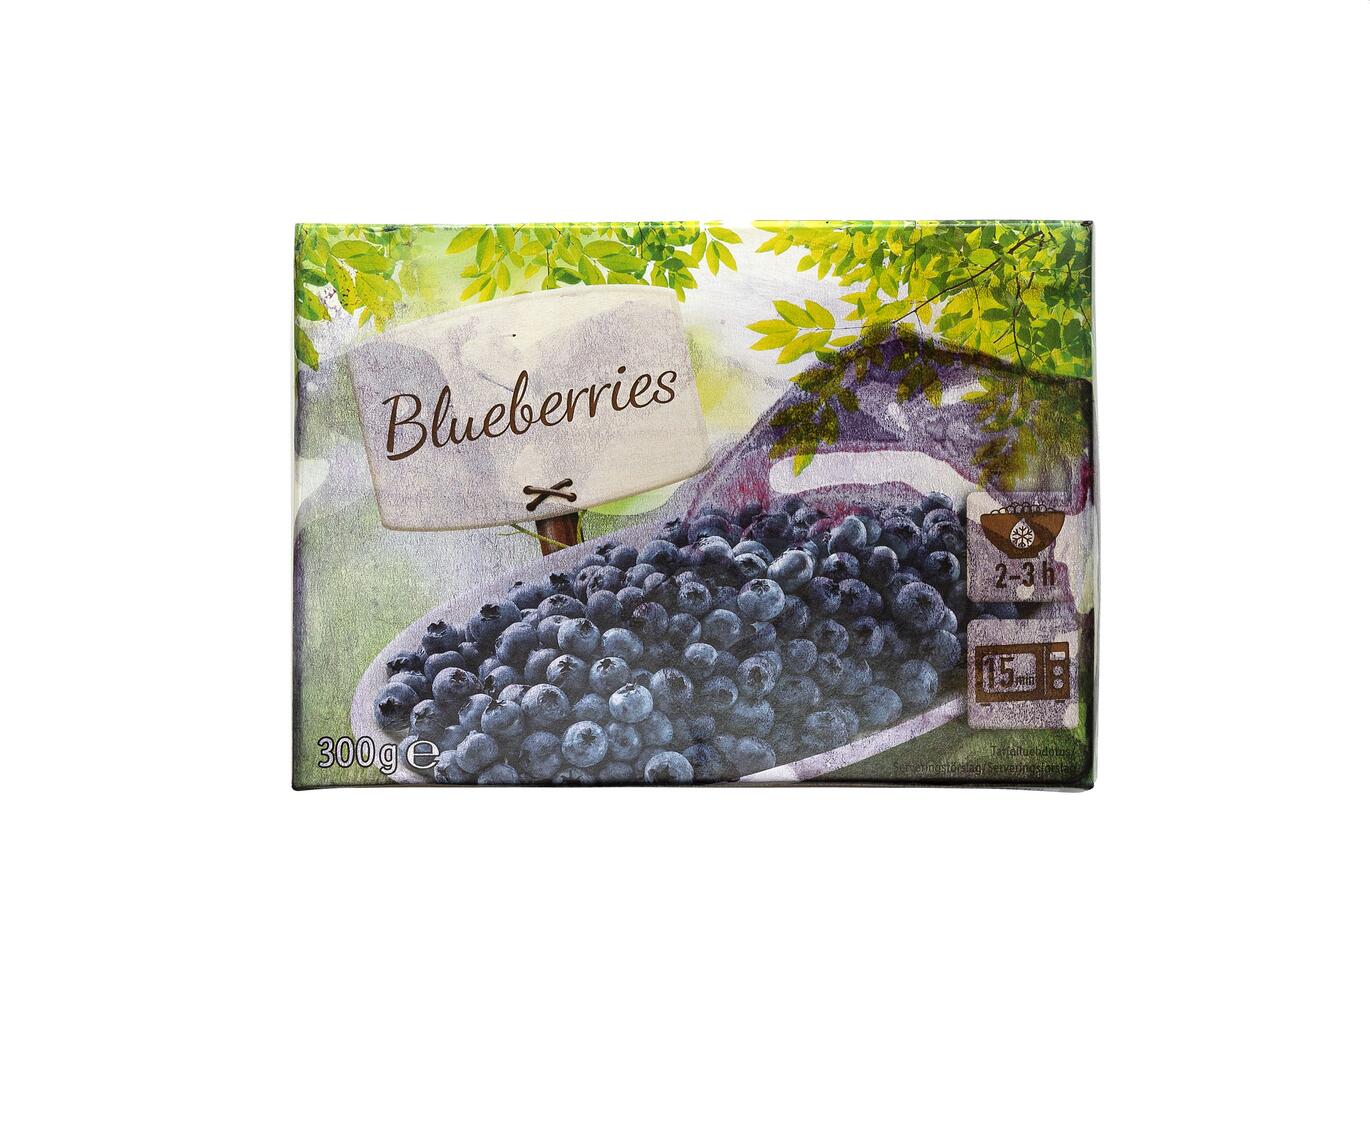 Blueberries Lidl